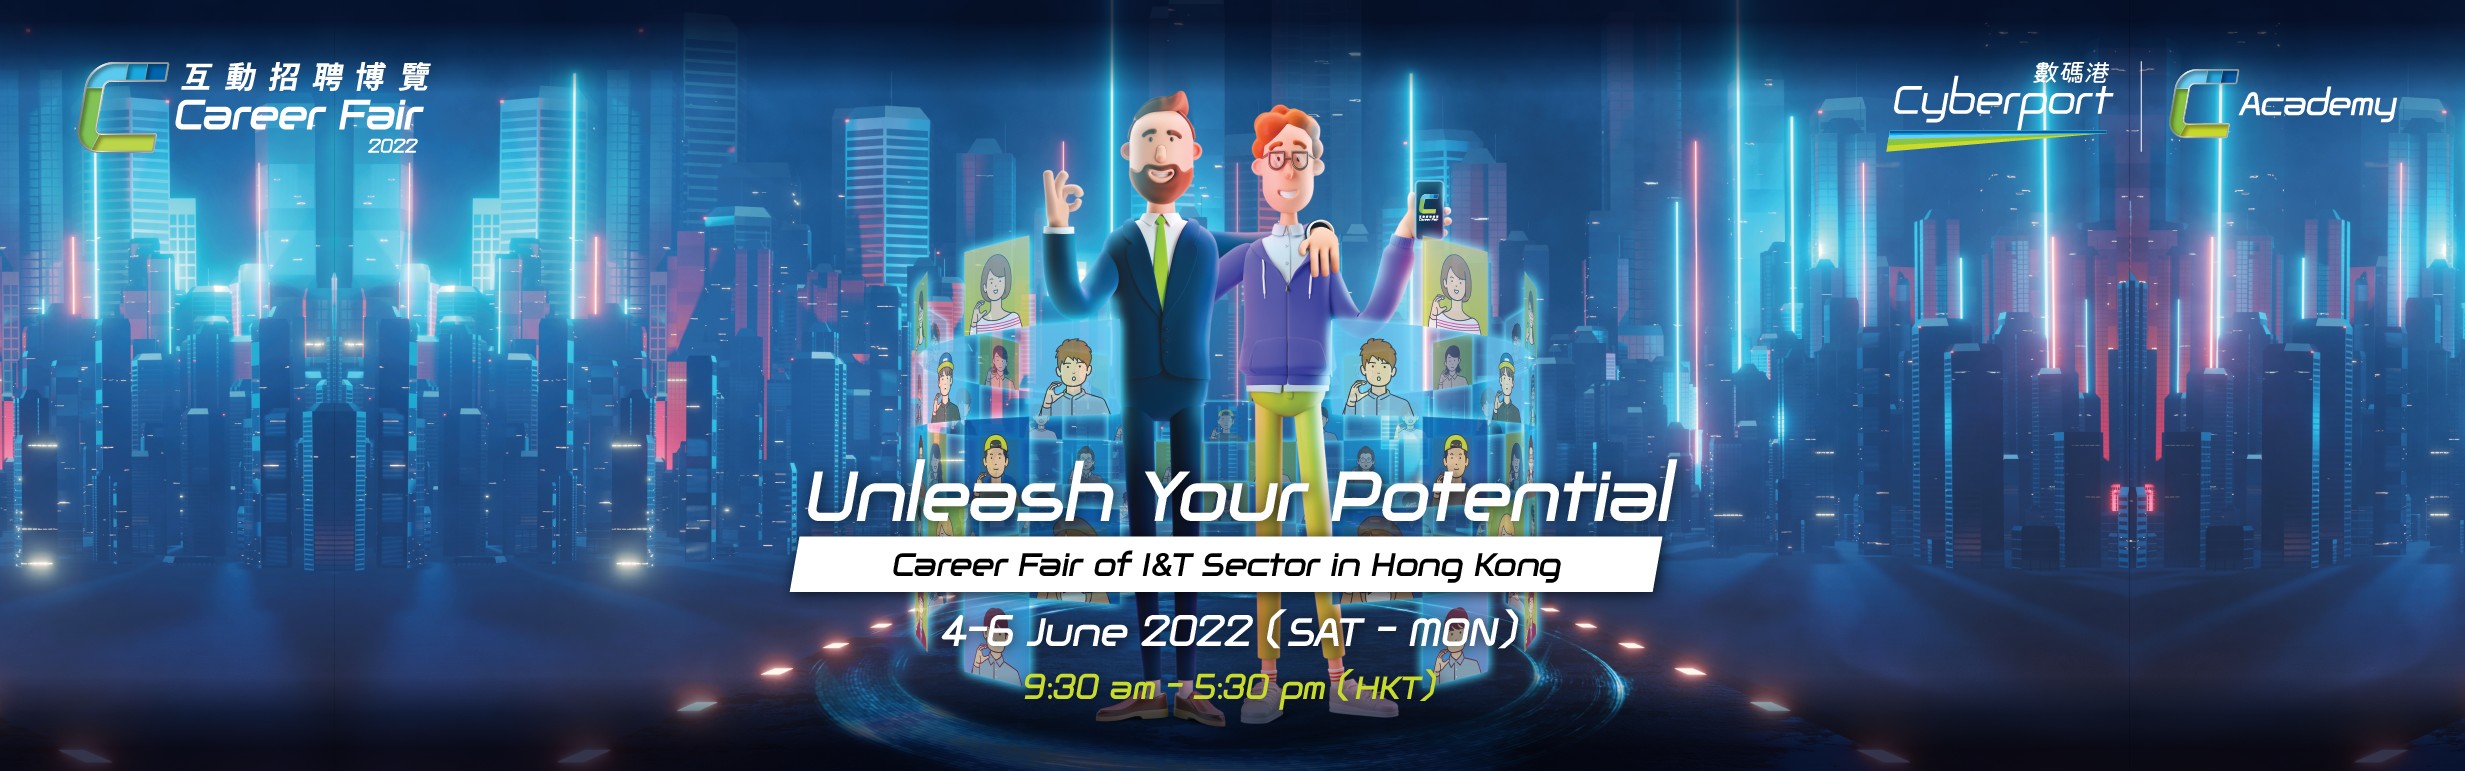 Cyberport Career Fair 2022